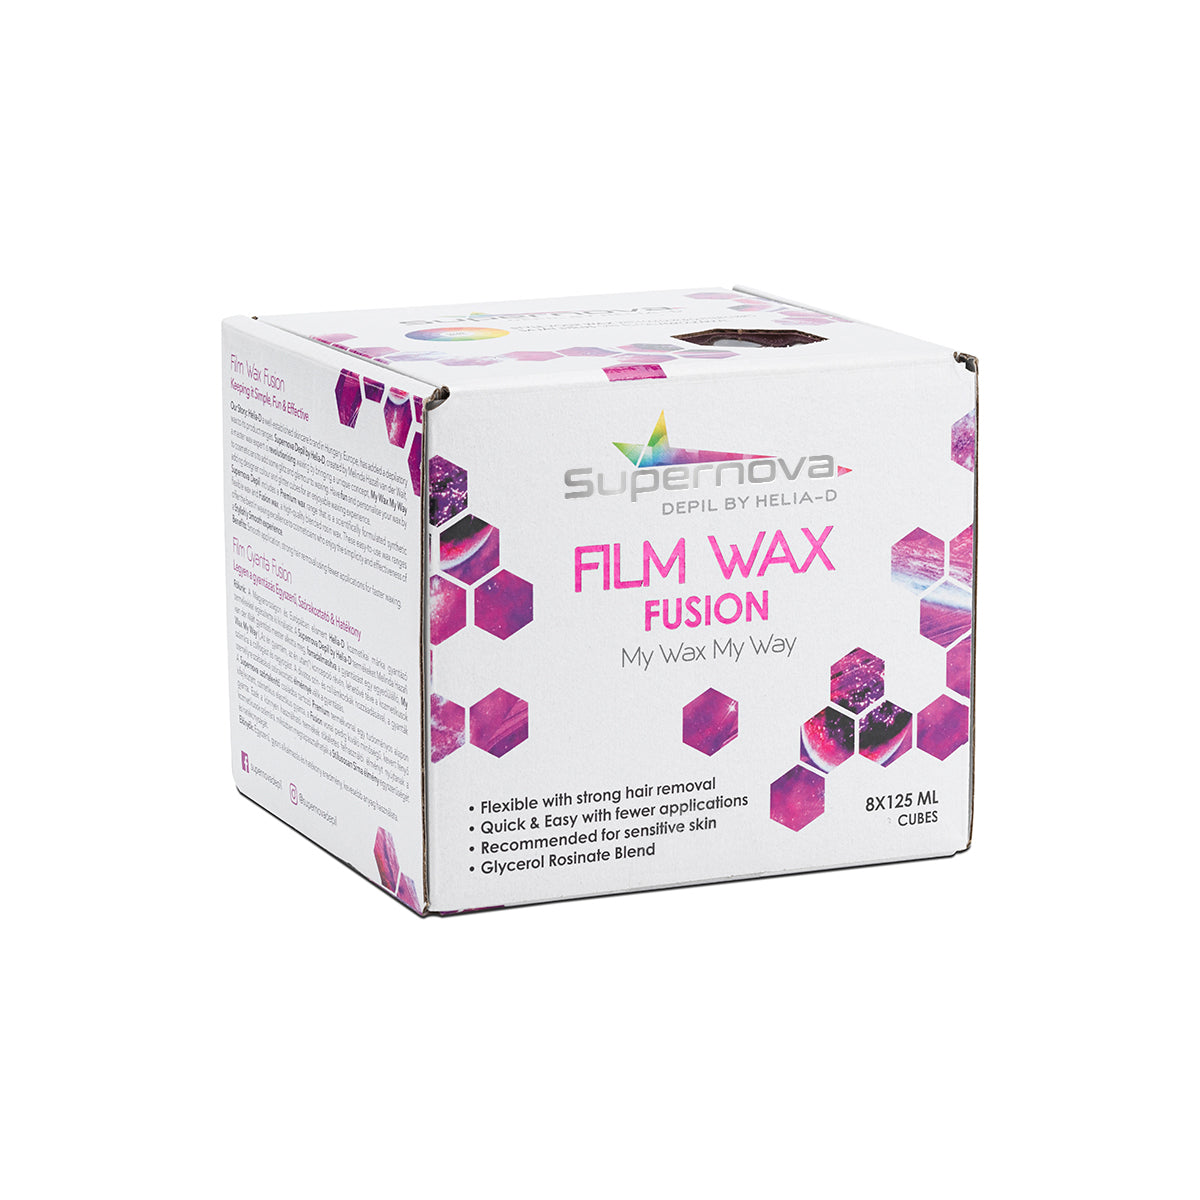 Film Wax Fusion